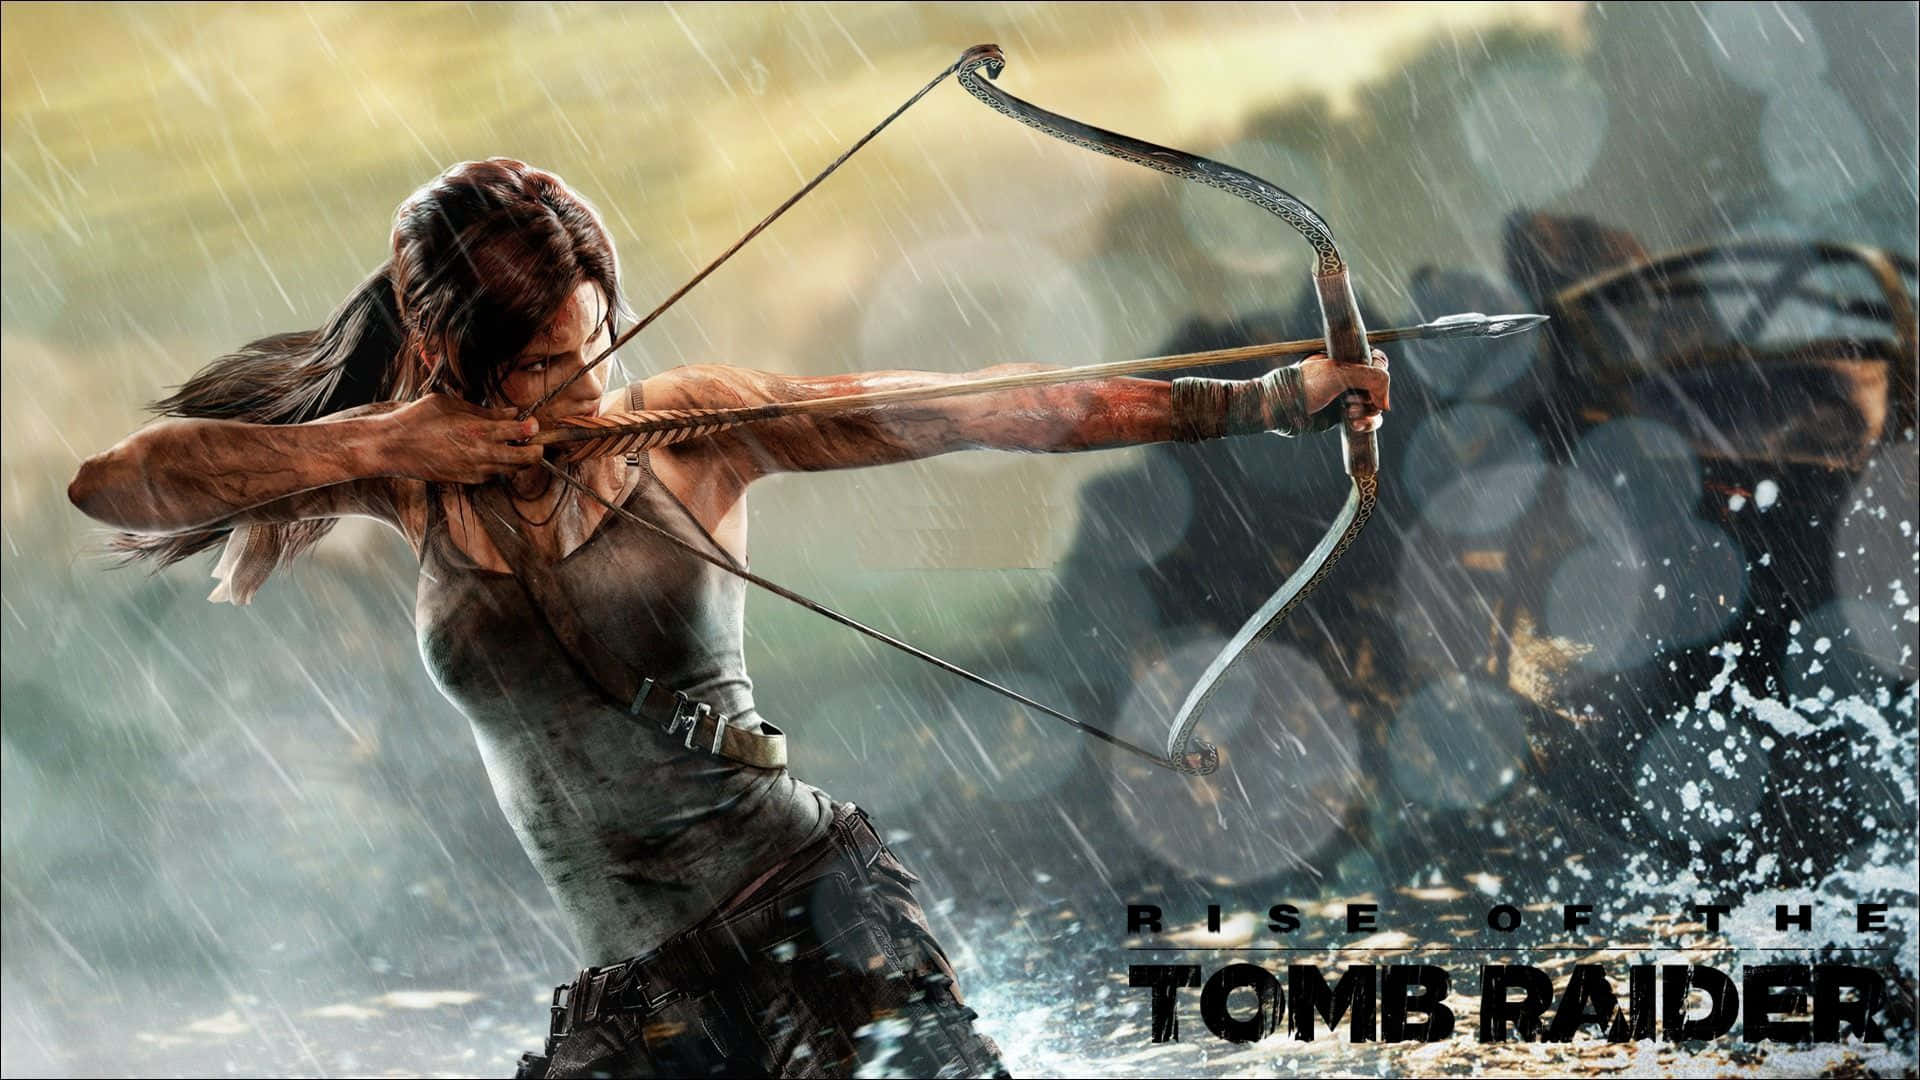 1080prise Of The Tomb Raider Båge Och Pil Bakgrundsbild.